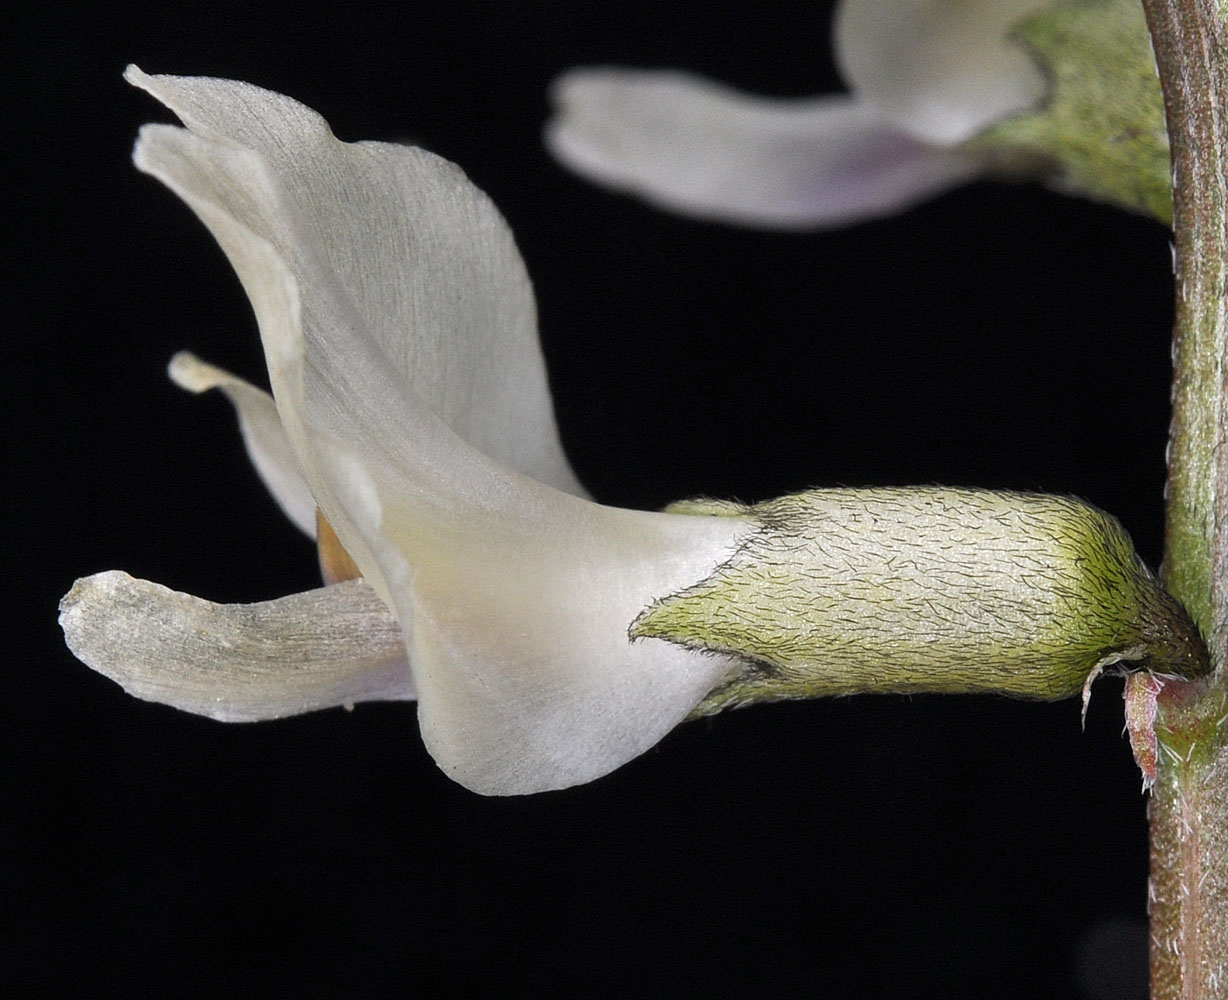 Flora of Eastern Washington Image: Astragalus sclerocarpus